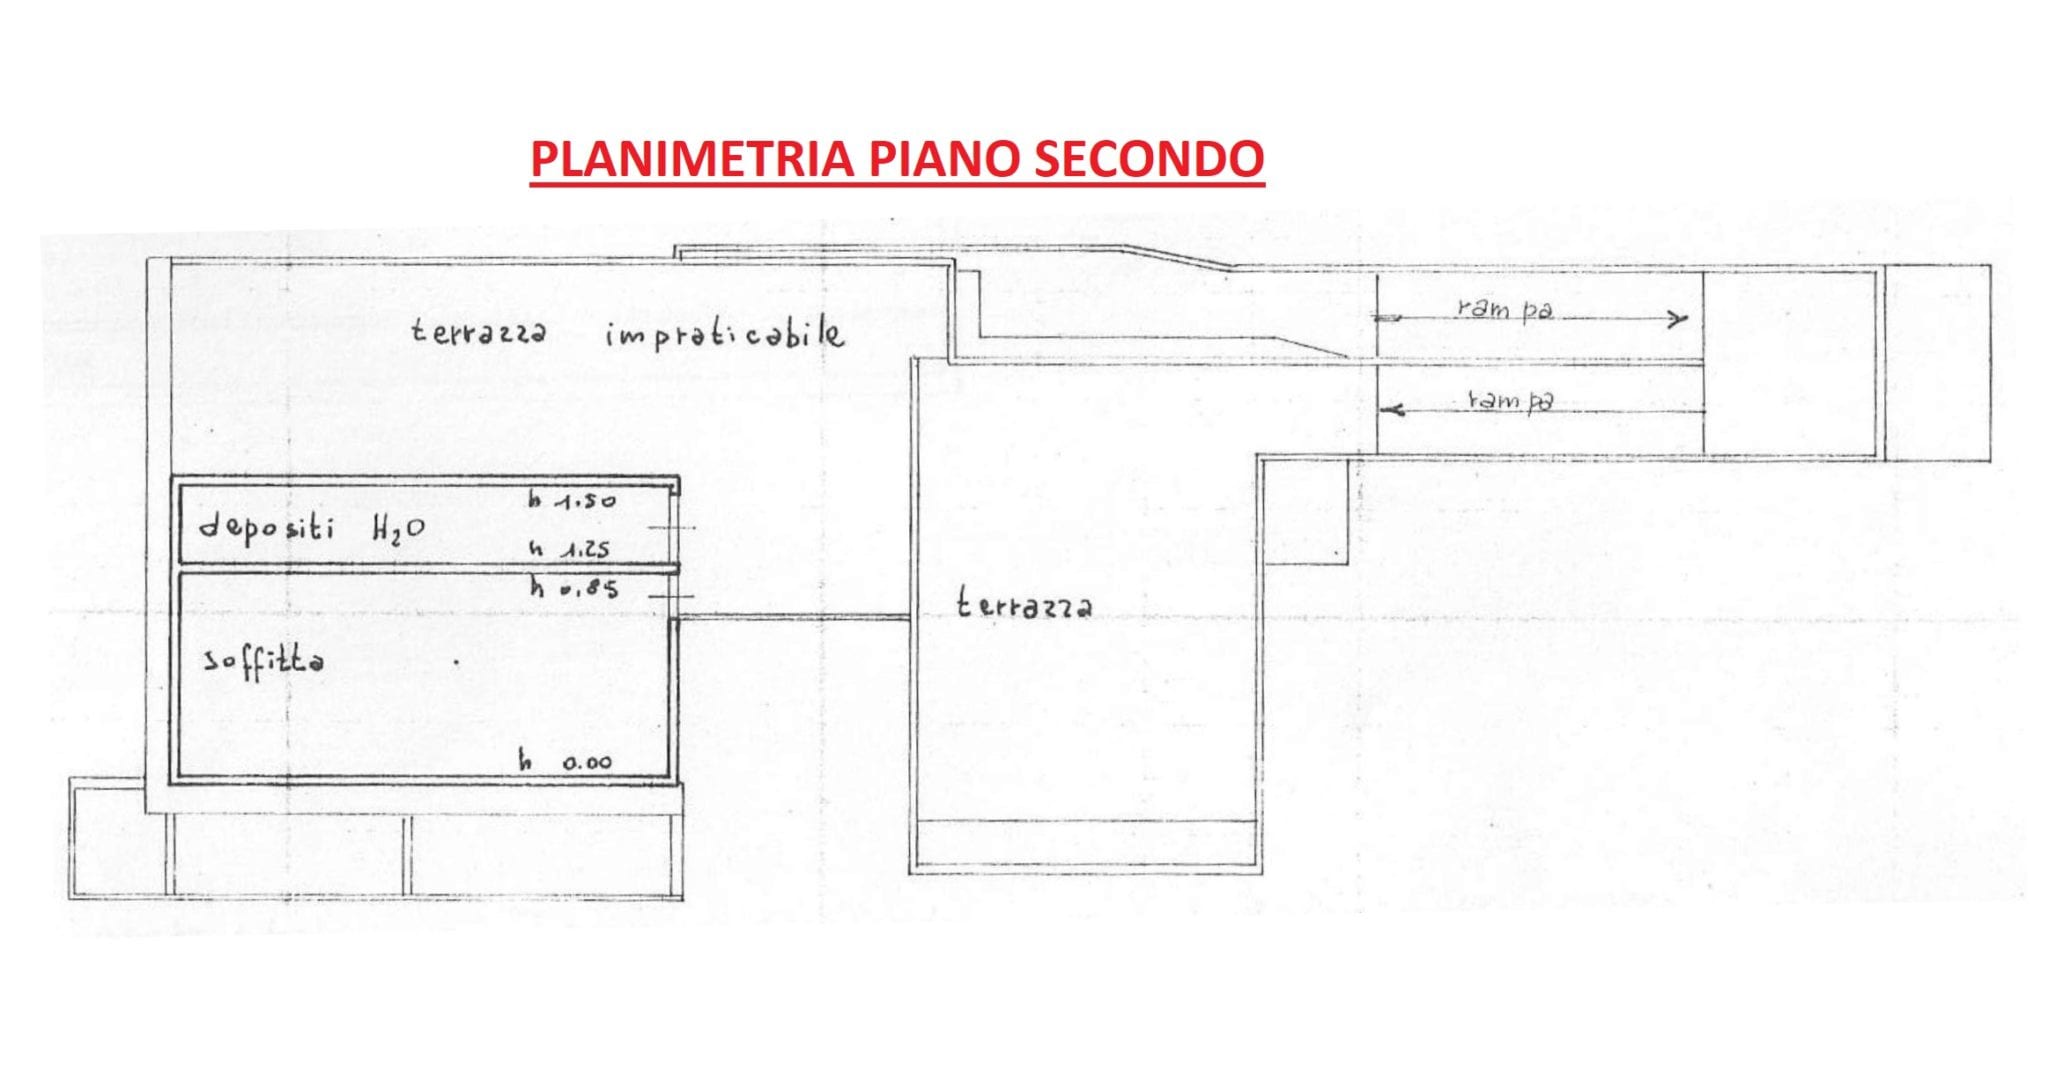 PLANIMETRIA PIANO SECONDO